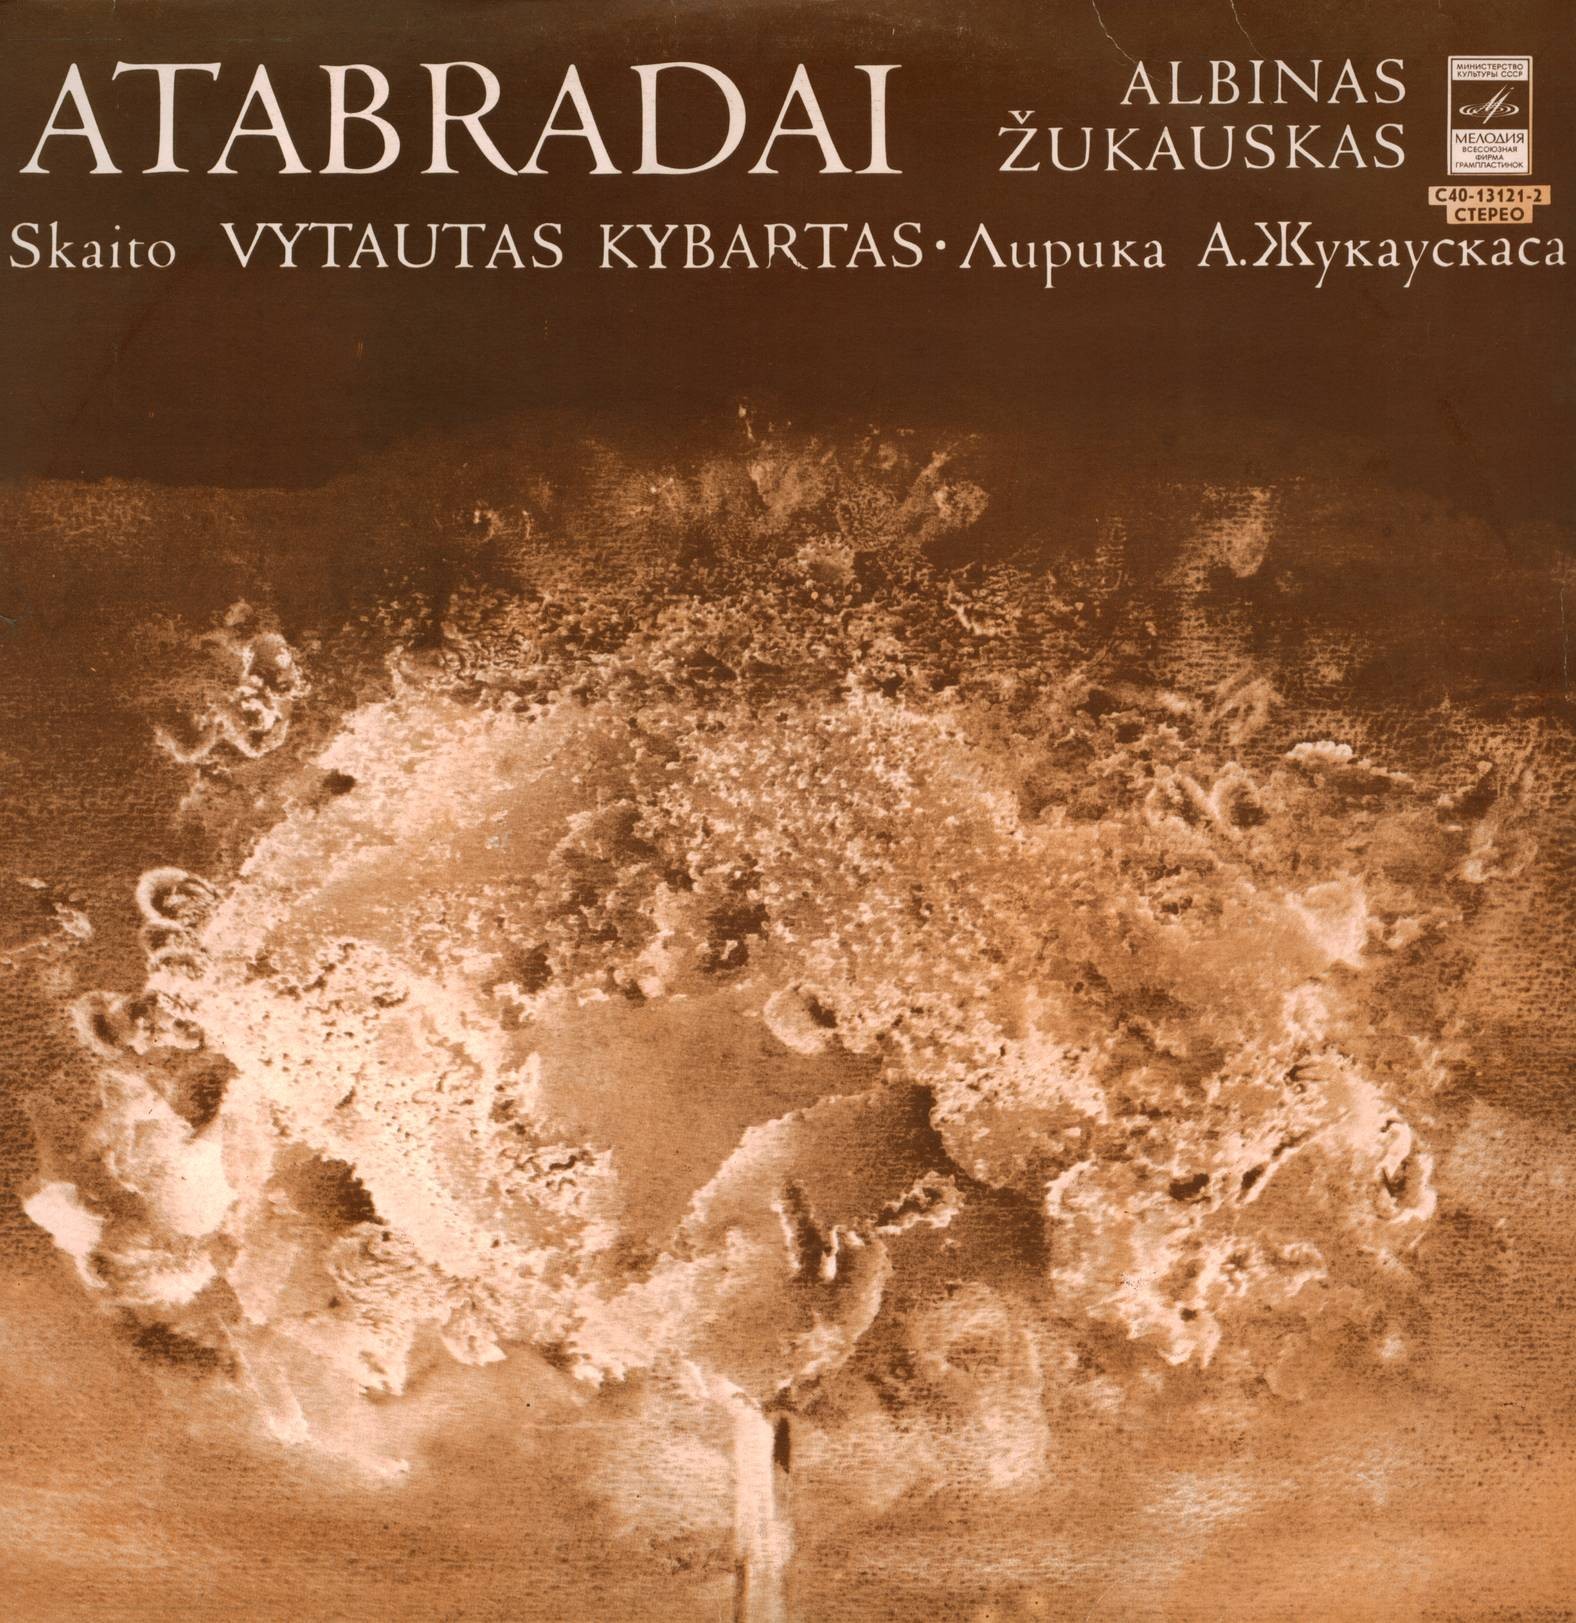 Лирика Альбинаса Жукаускаса (р. 1912) / Albinas Žukauskas - Vytautas Kybartas ‎– Atabradai